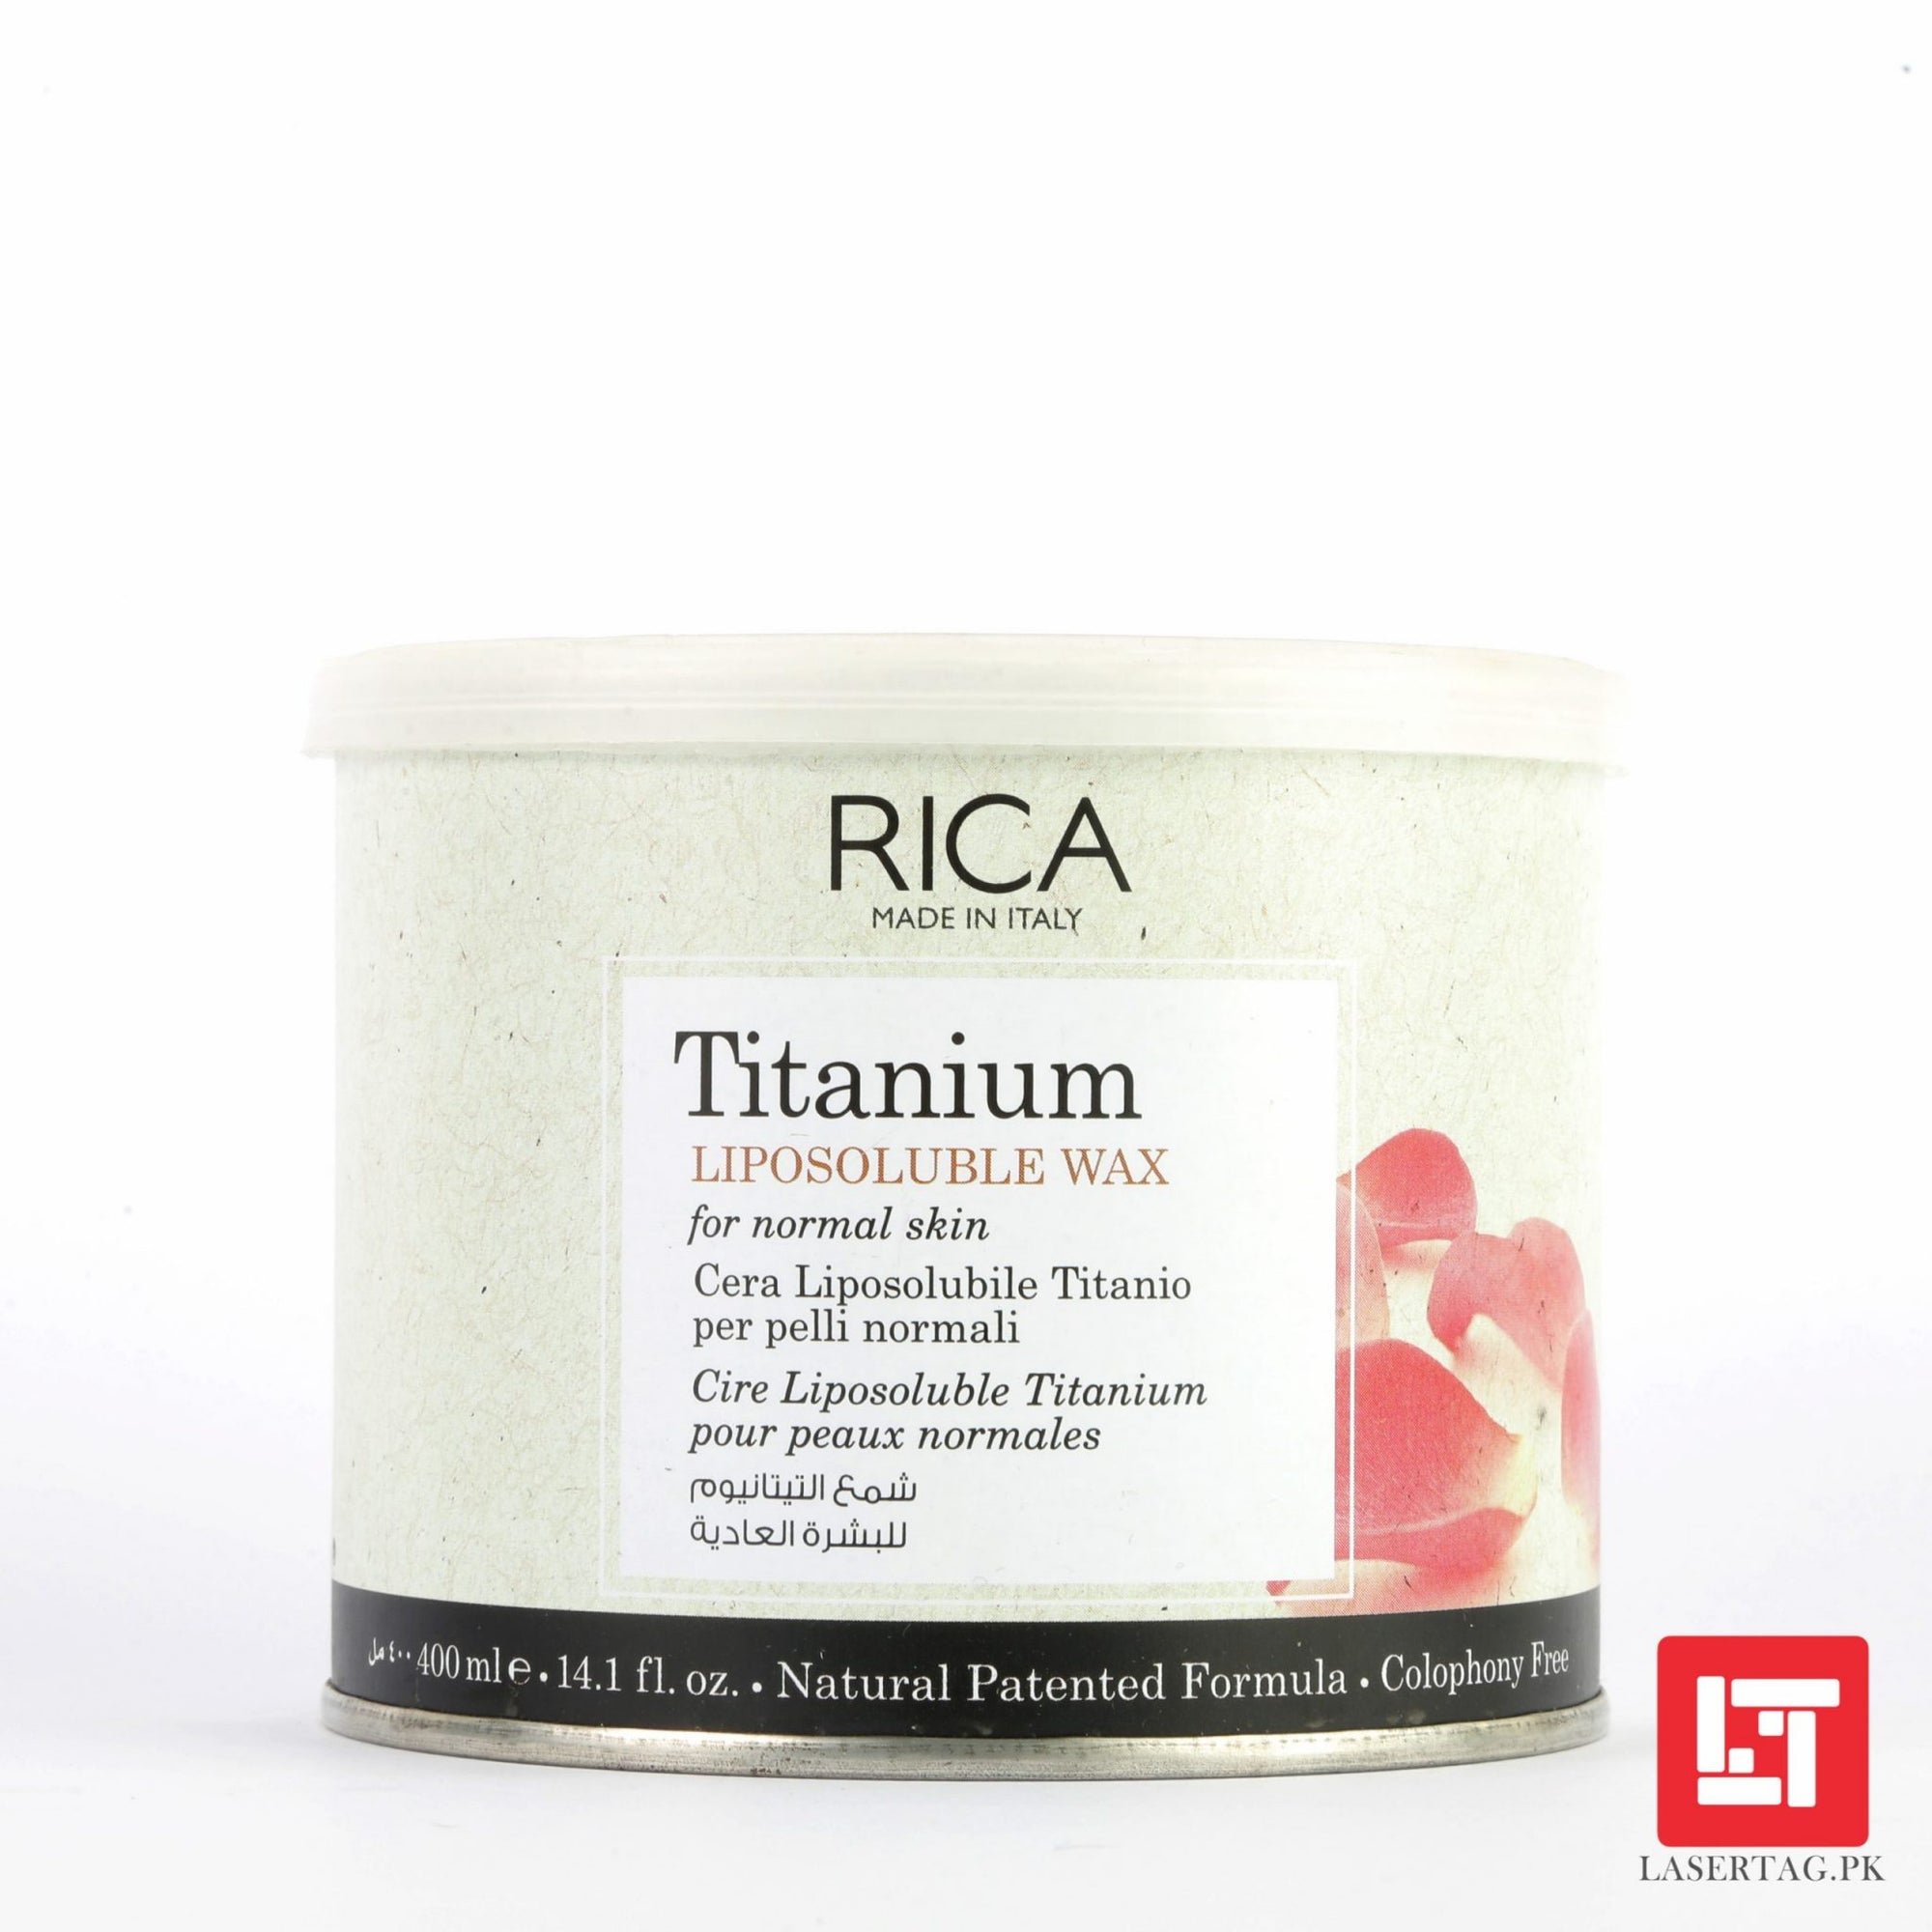 RICA Liposoluble Wax For Sensitive Skin Titanium 400ml freeshipping - lasertag.pk